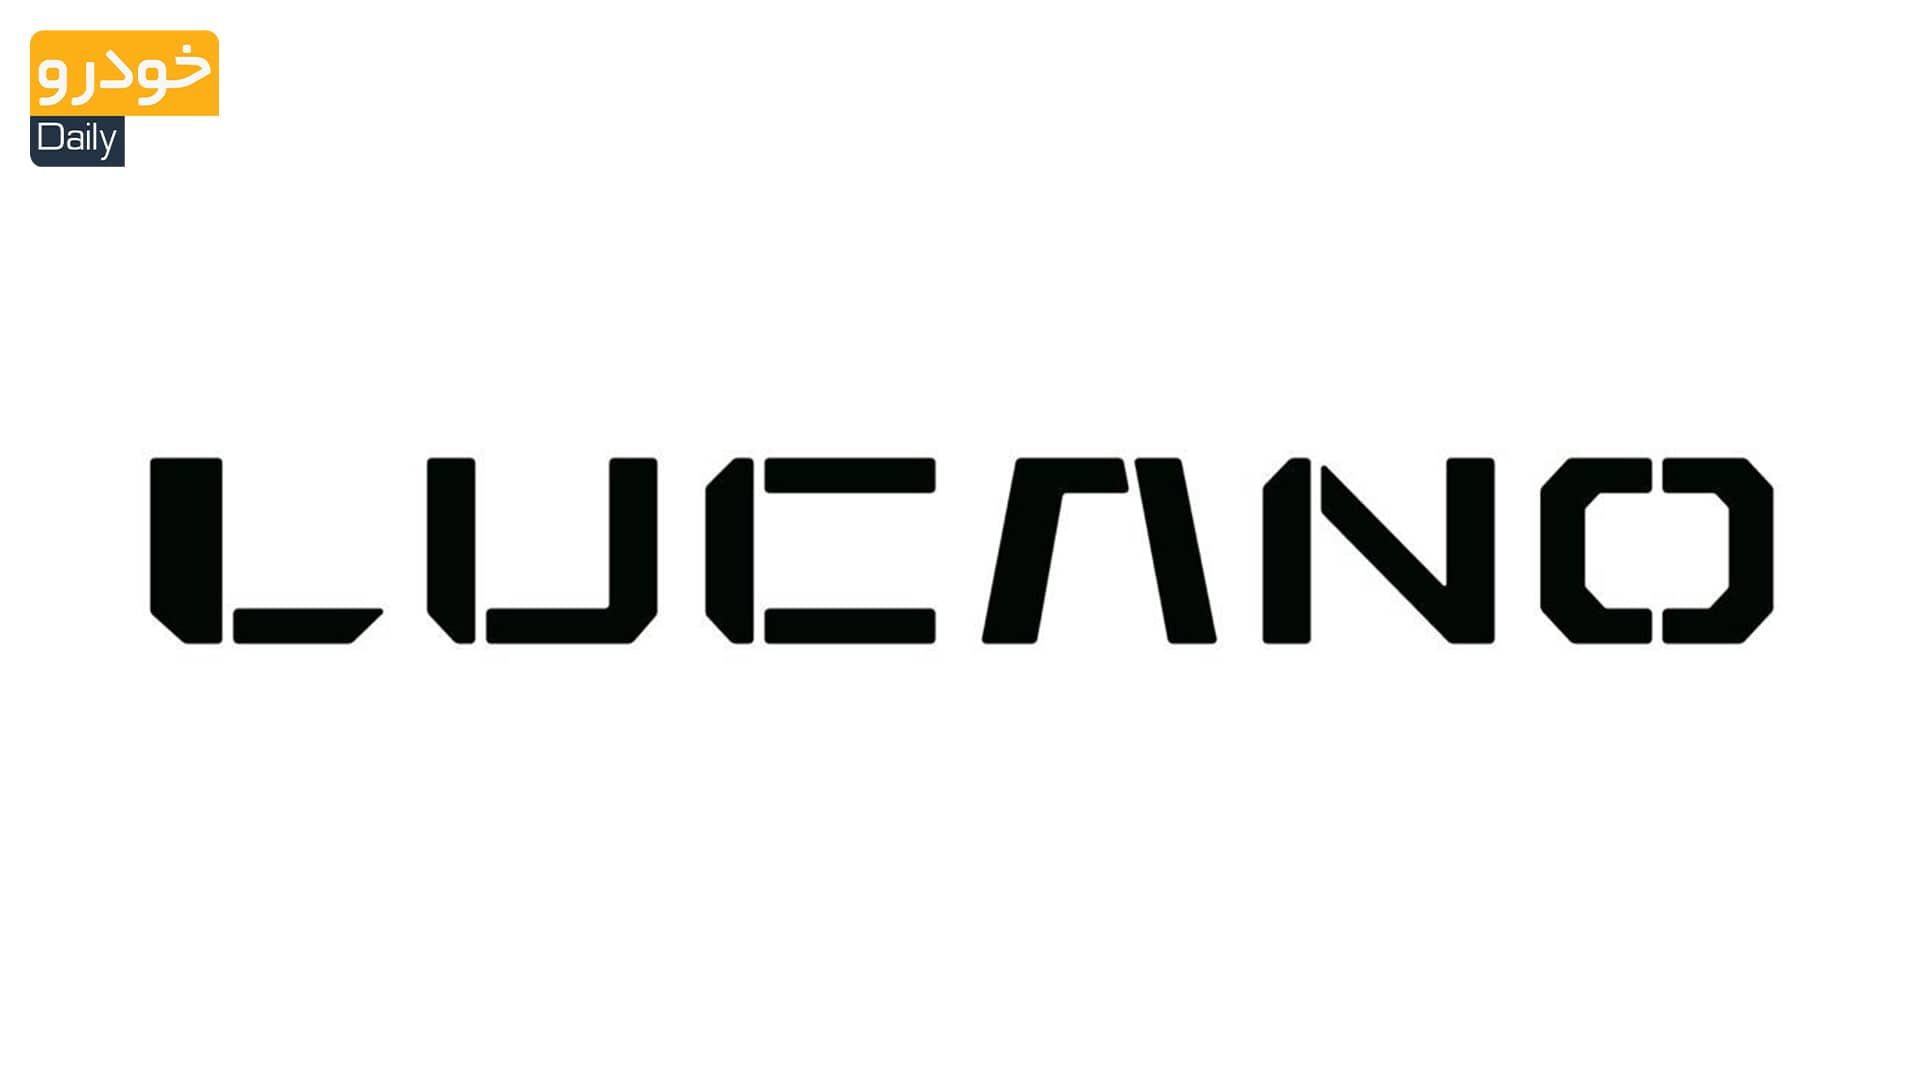 LUCANO brand a.k.a JAECOO - شریک تجاری جدید ماموت خودرو را بشناسید؛ داستان برند LUCANO چیست؟